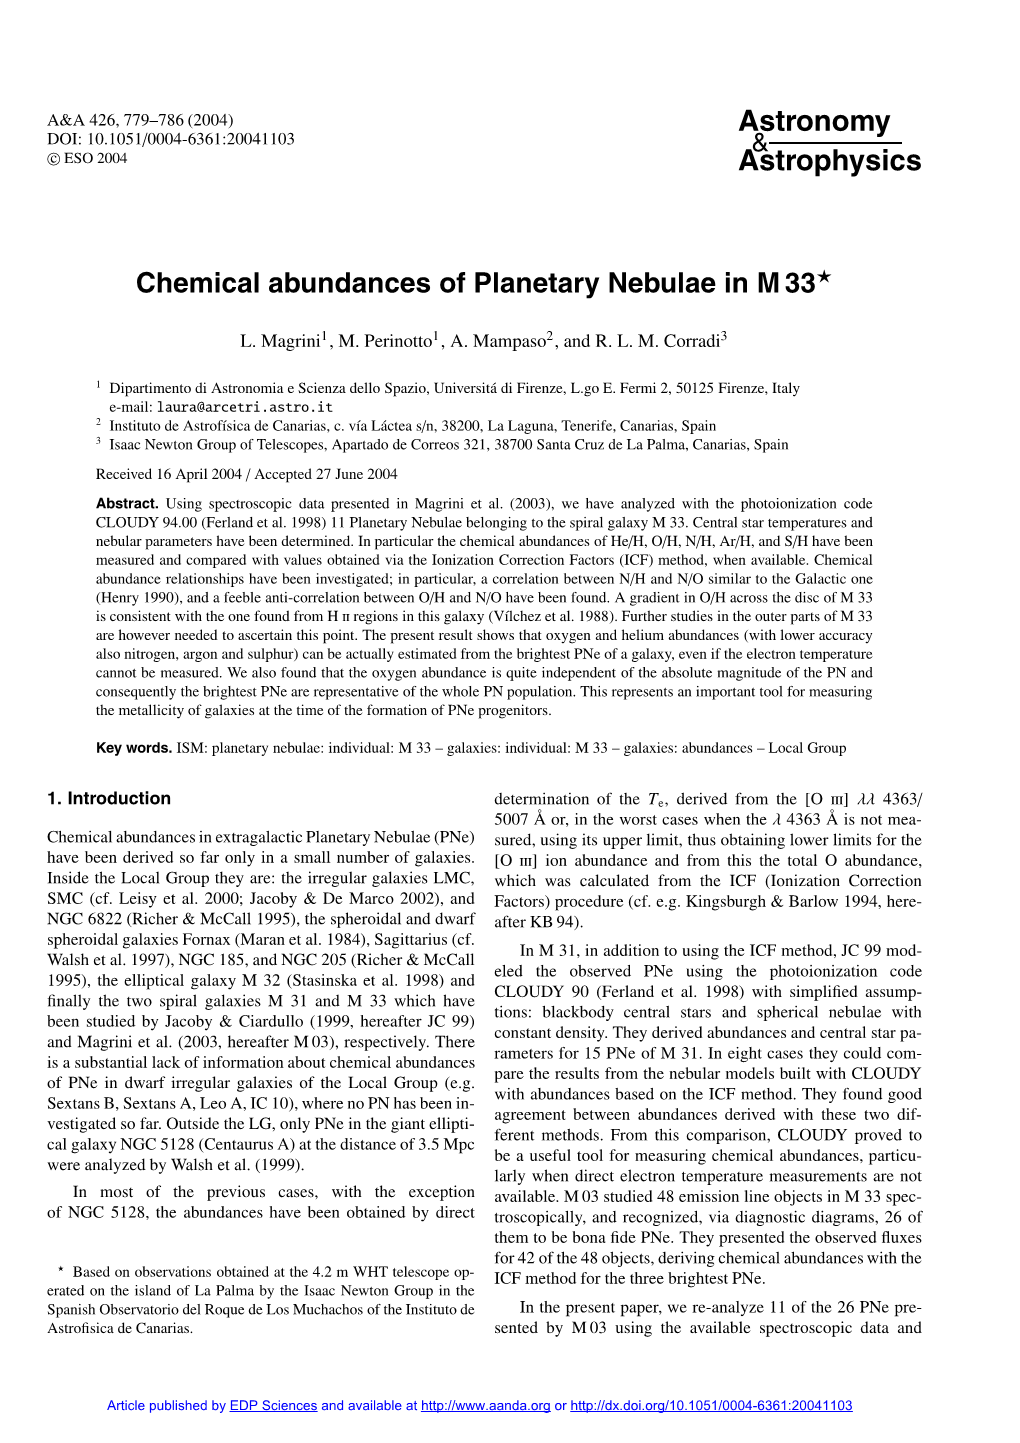 Chemical Abundances of Planetary Nebulae in M 33